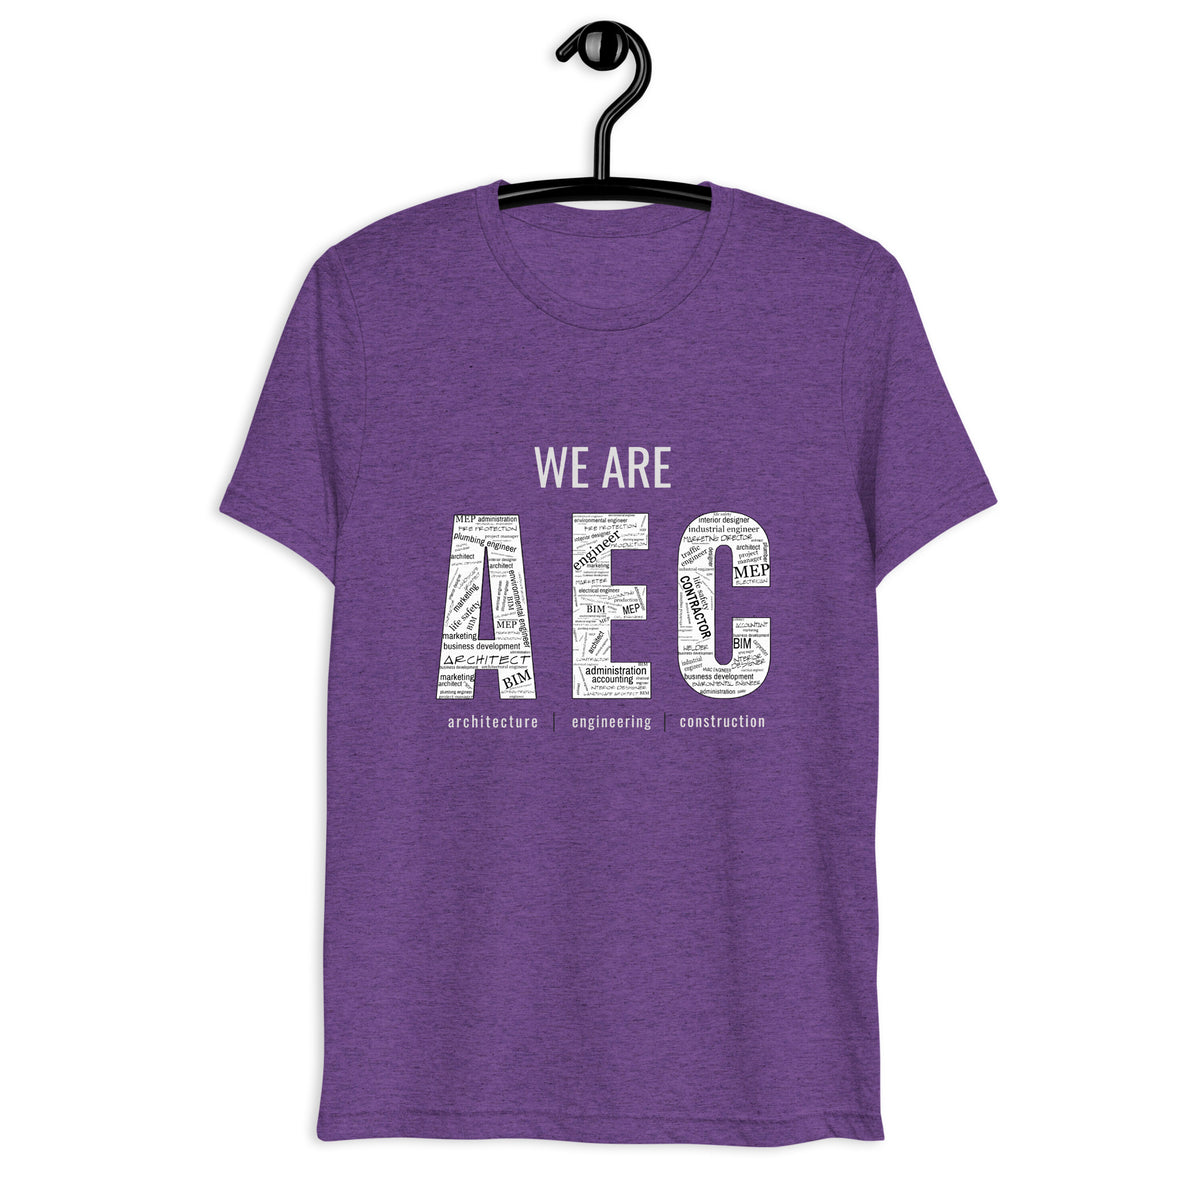 We are AEC | Senior Mechanical Piping Designer Cover